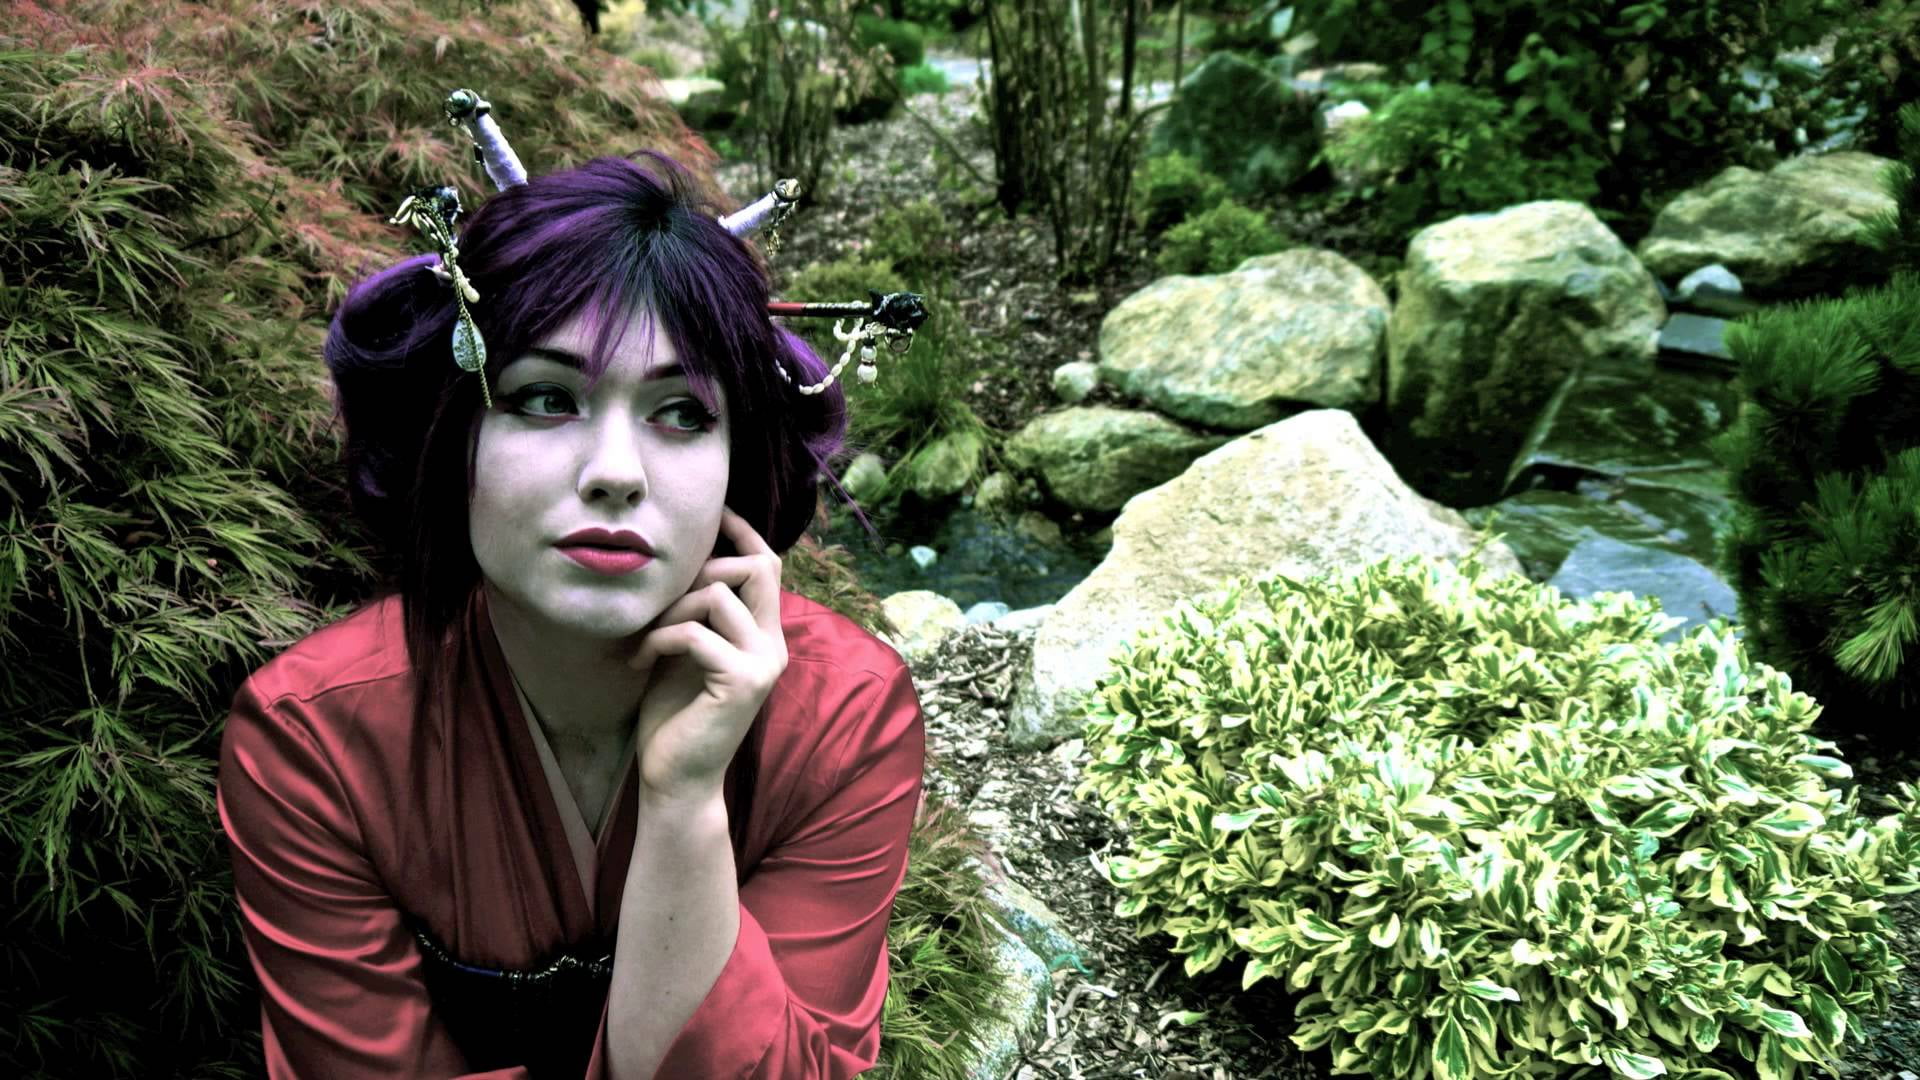 Veela, purple hair, garden, plants, waterfall, geisha, women outdoors